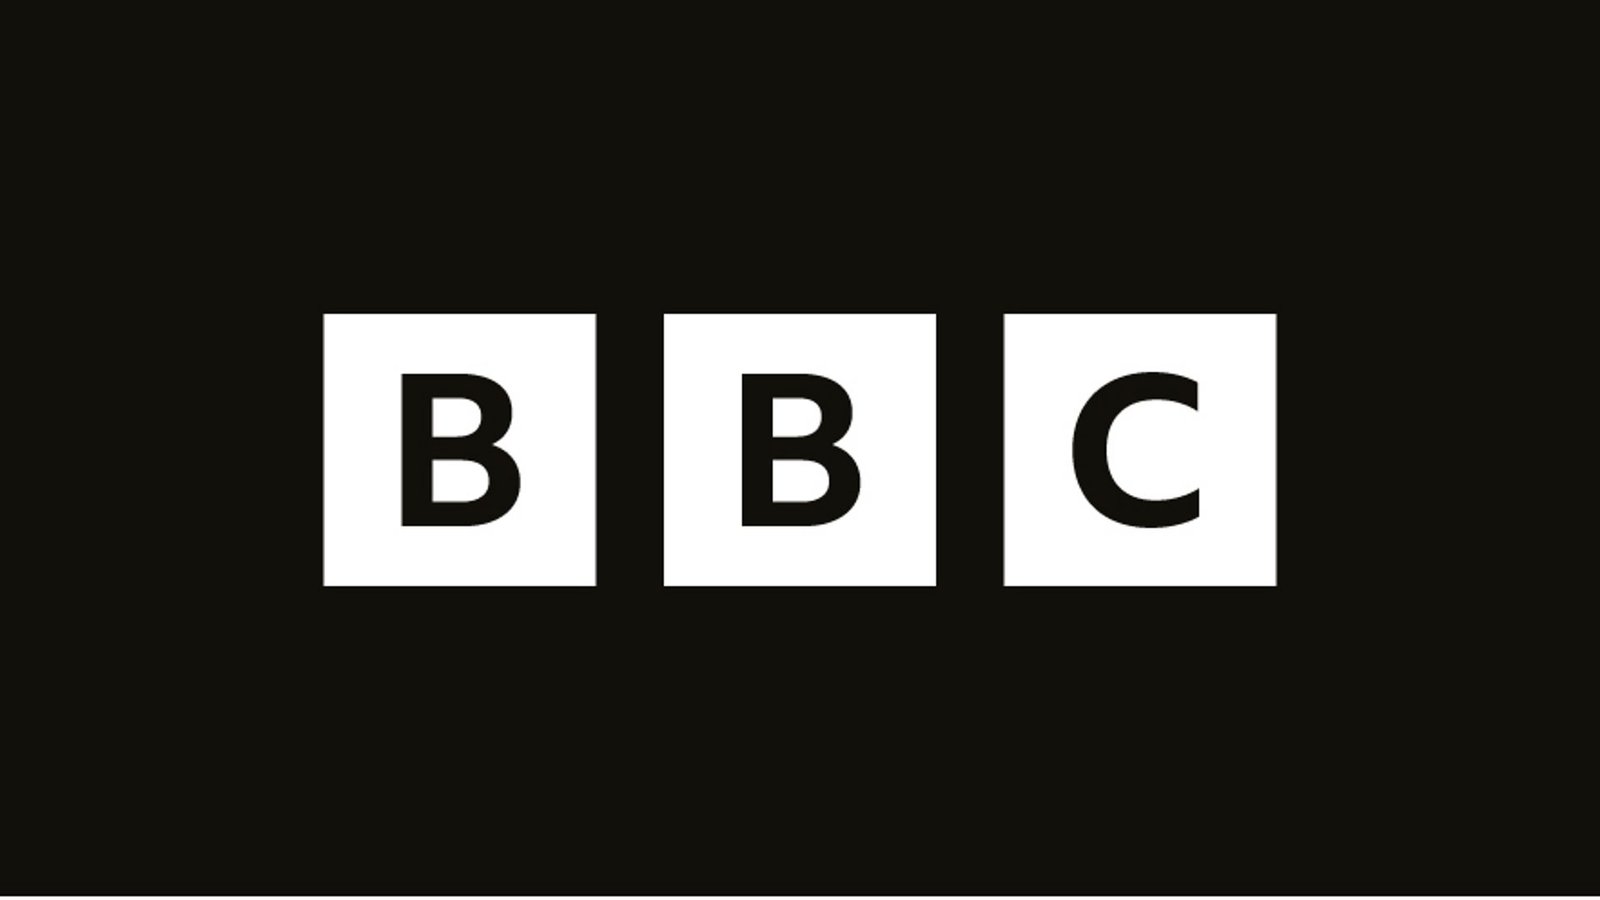 BBC Faces Backlash Over Airing Antisemitic Social Media Posts